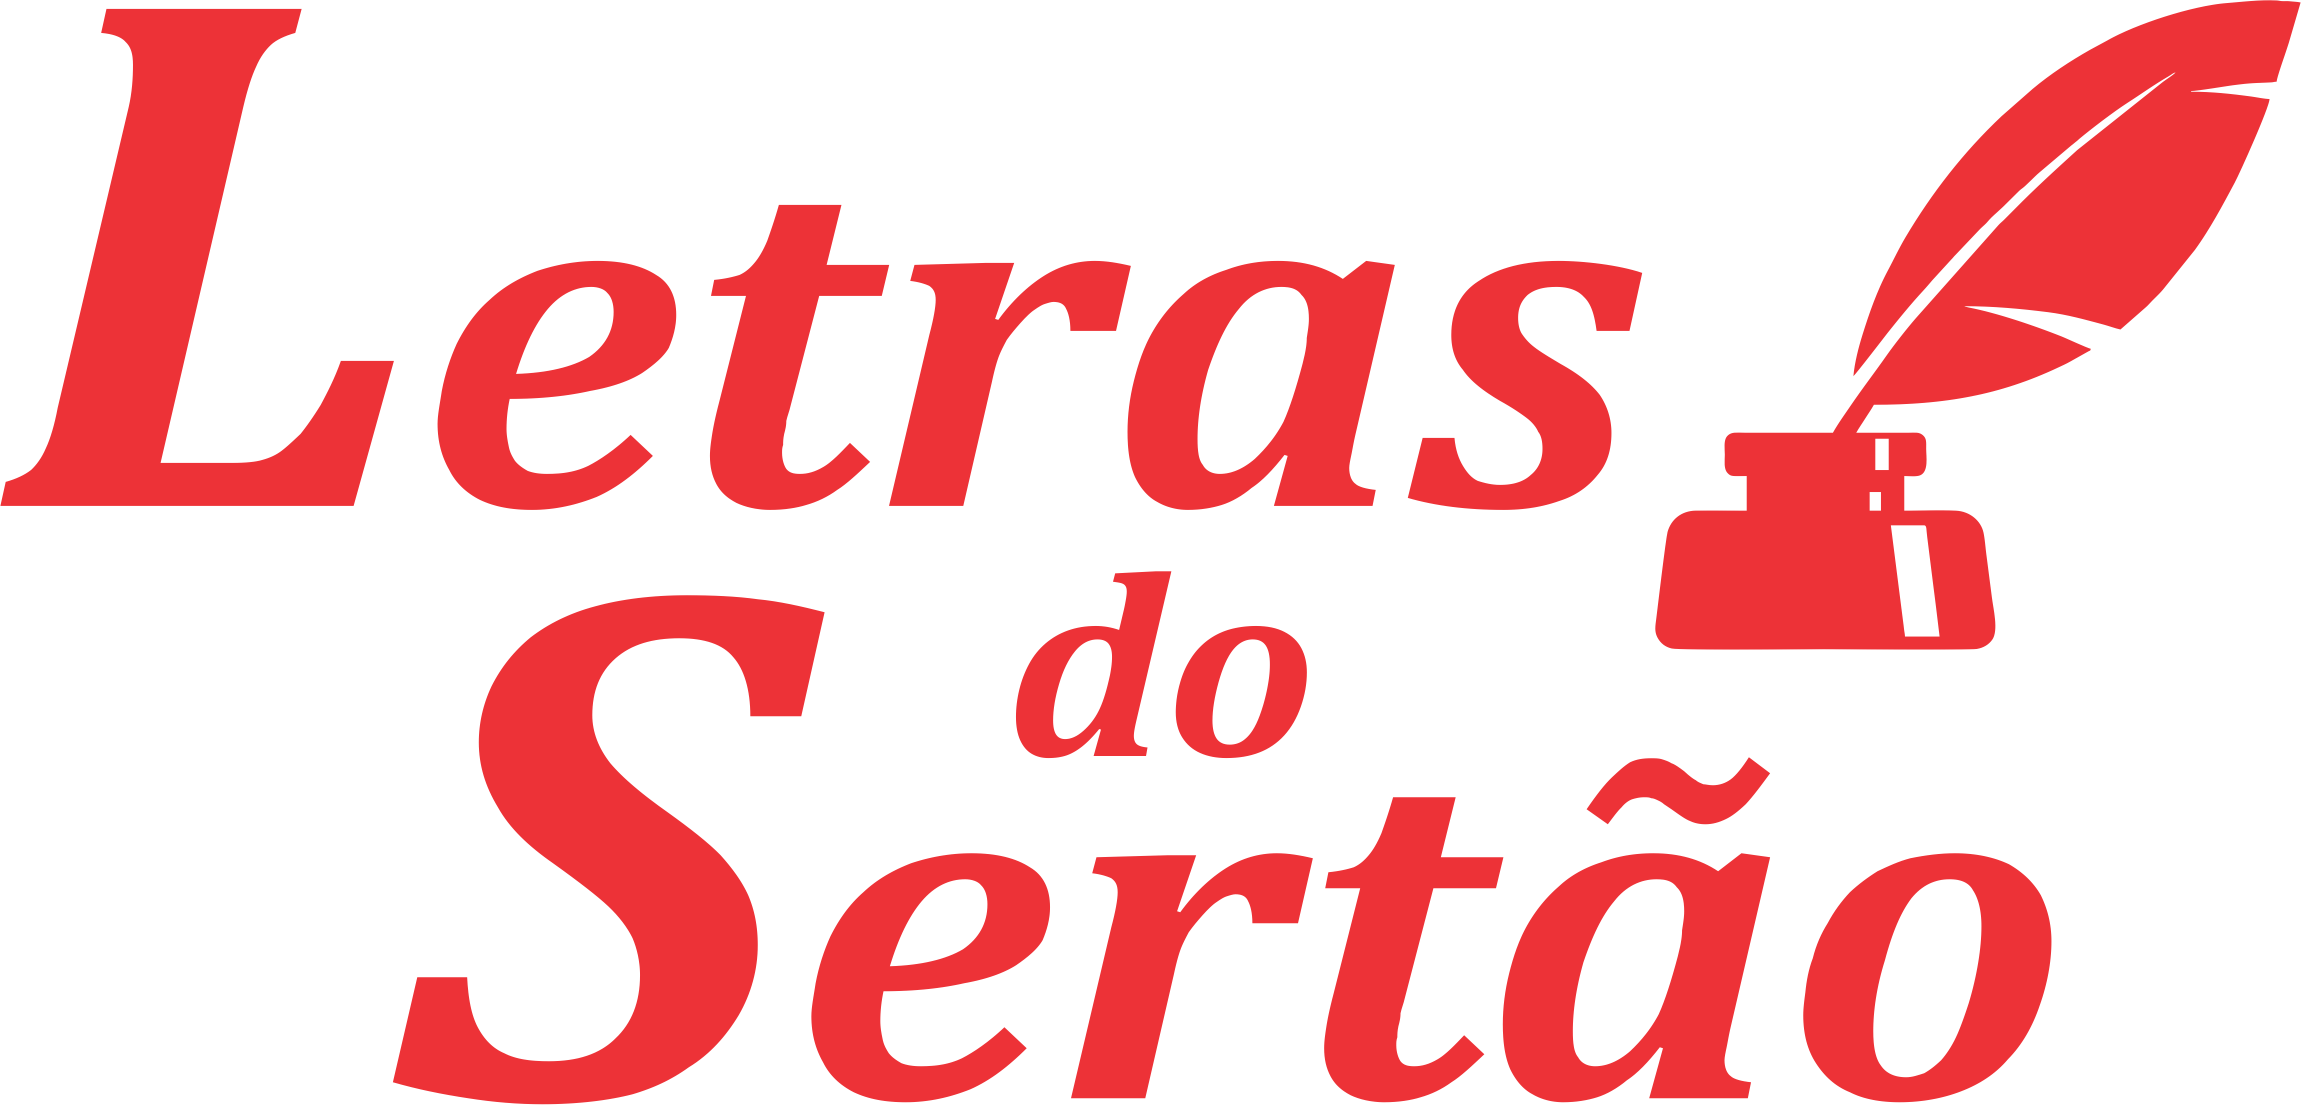 Jociandre Barbosa de Sousa